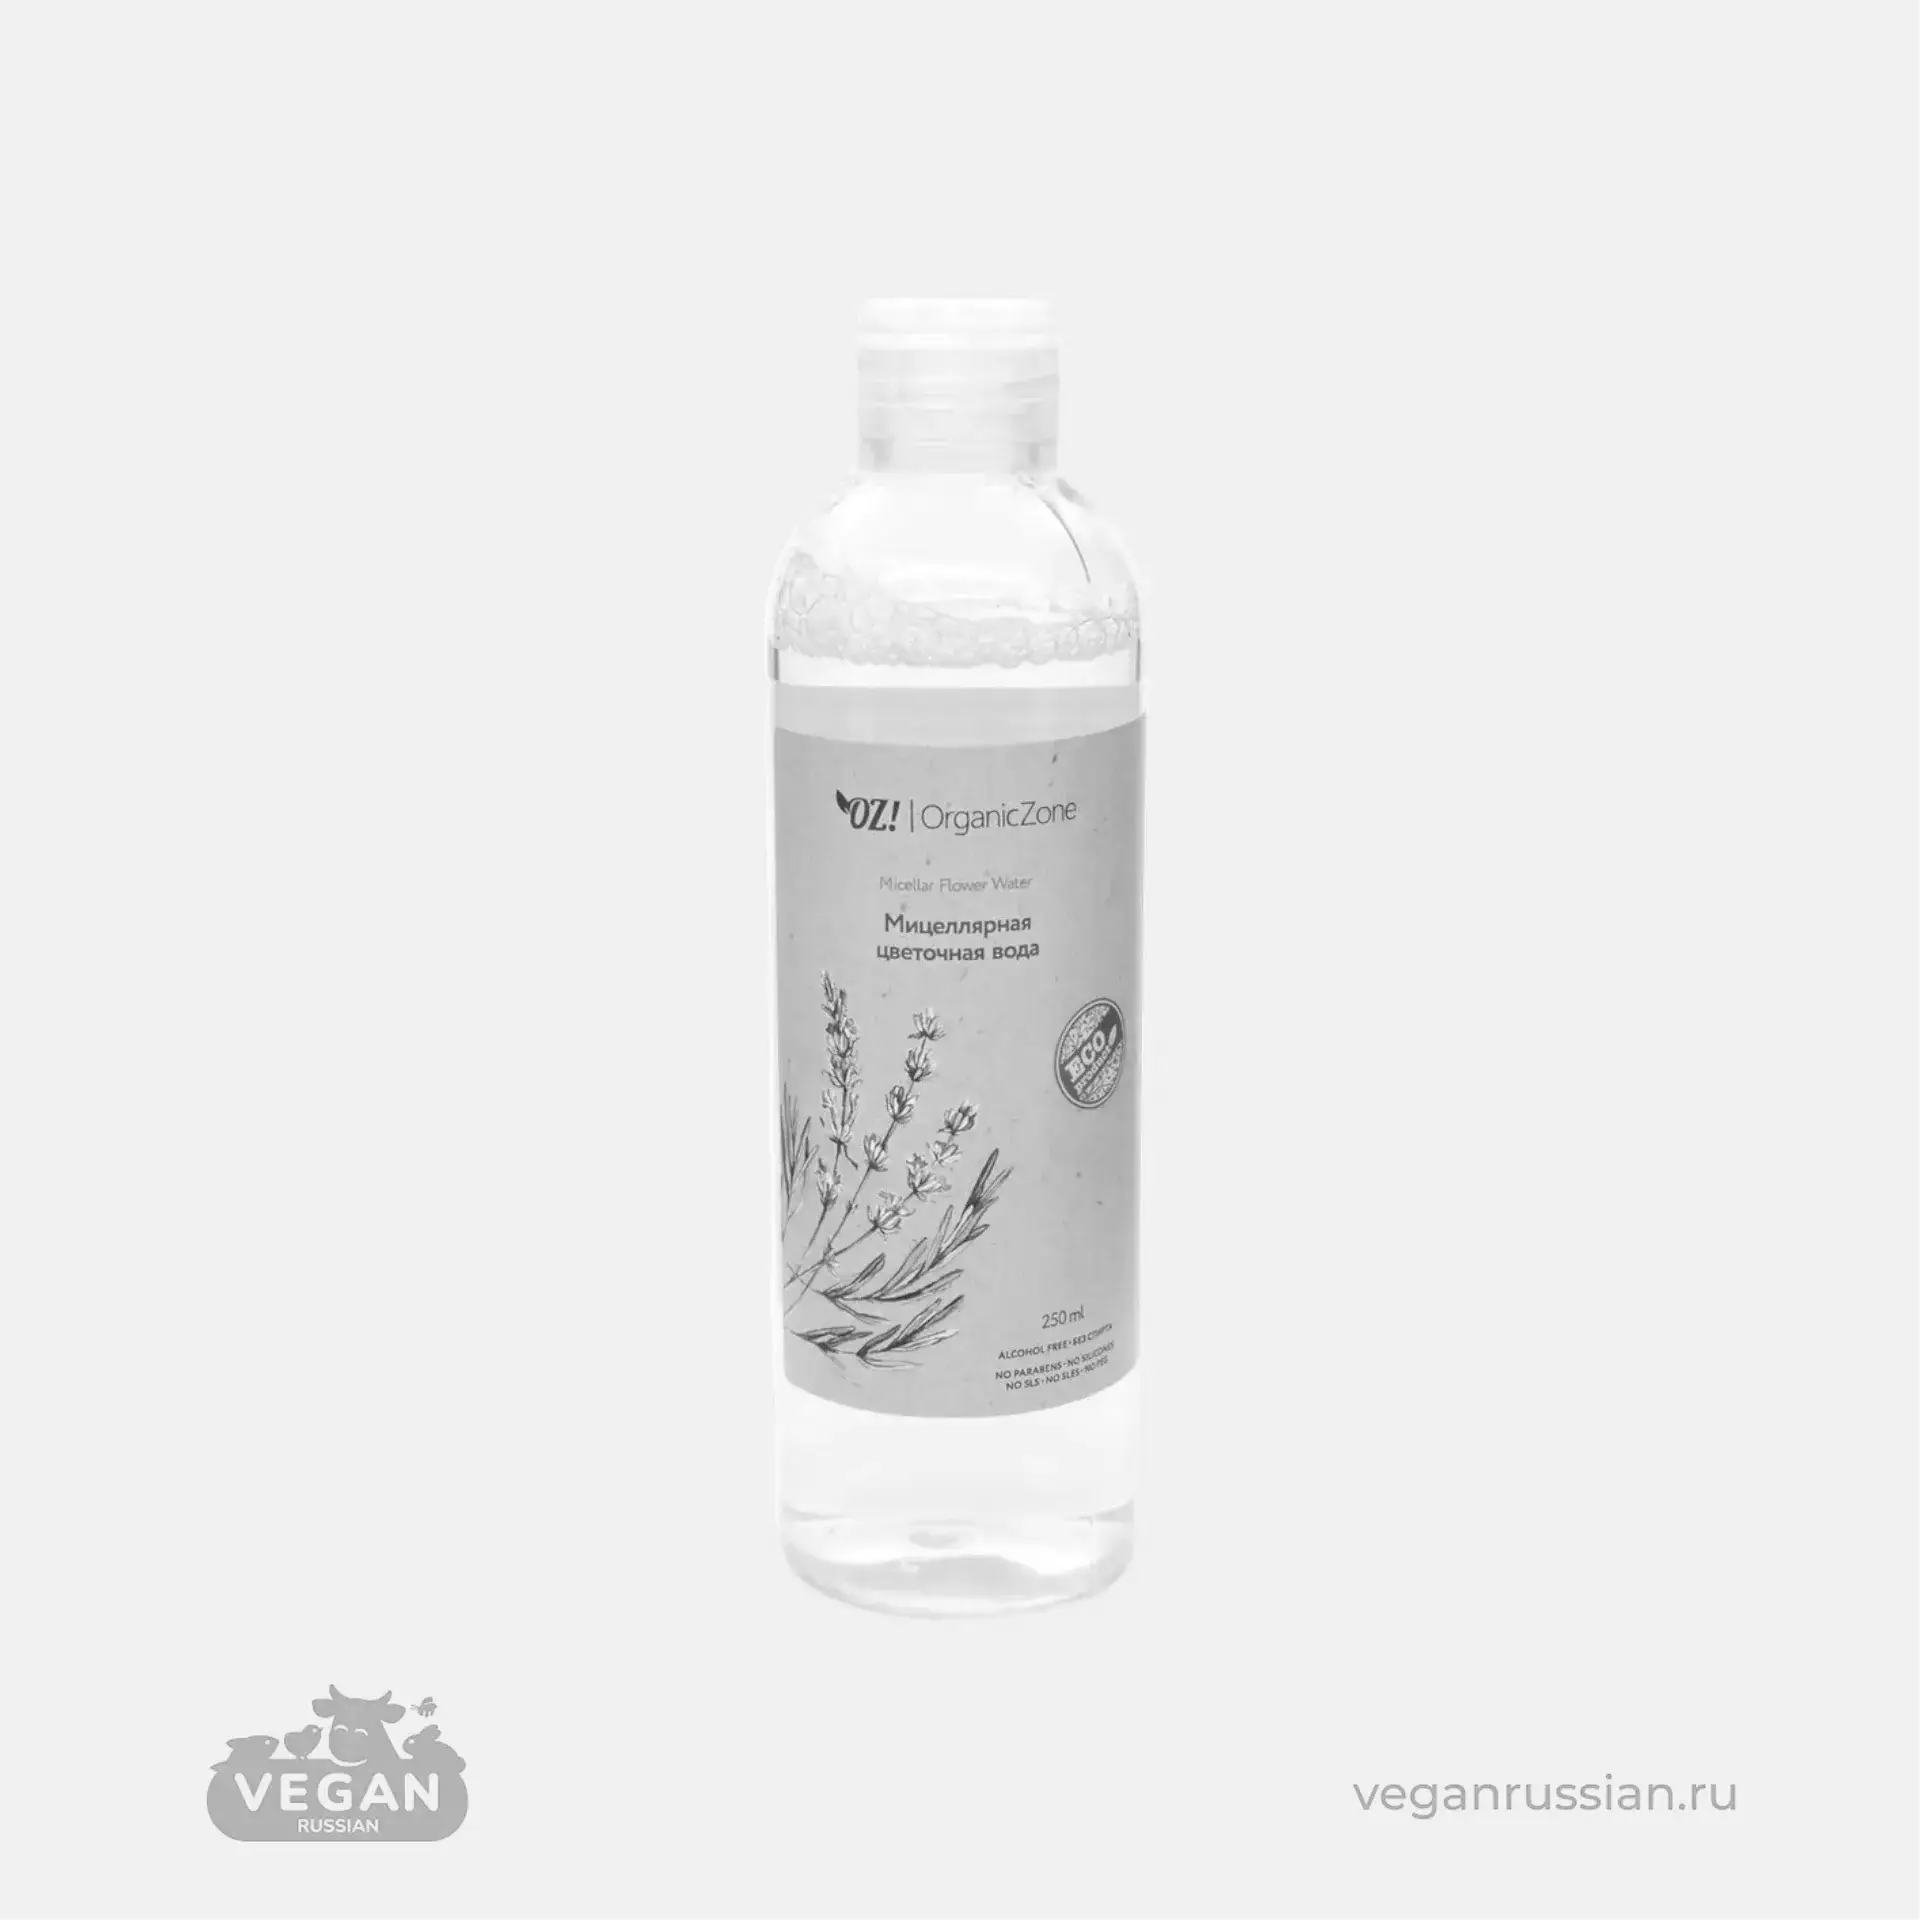 Архив: Мицеллярная цветочная вода OZ! OrganicZone 250-1000 мл